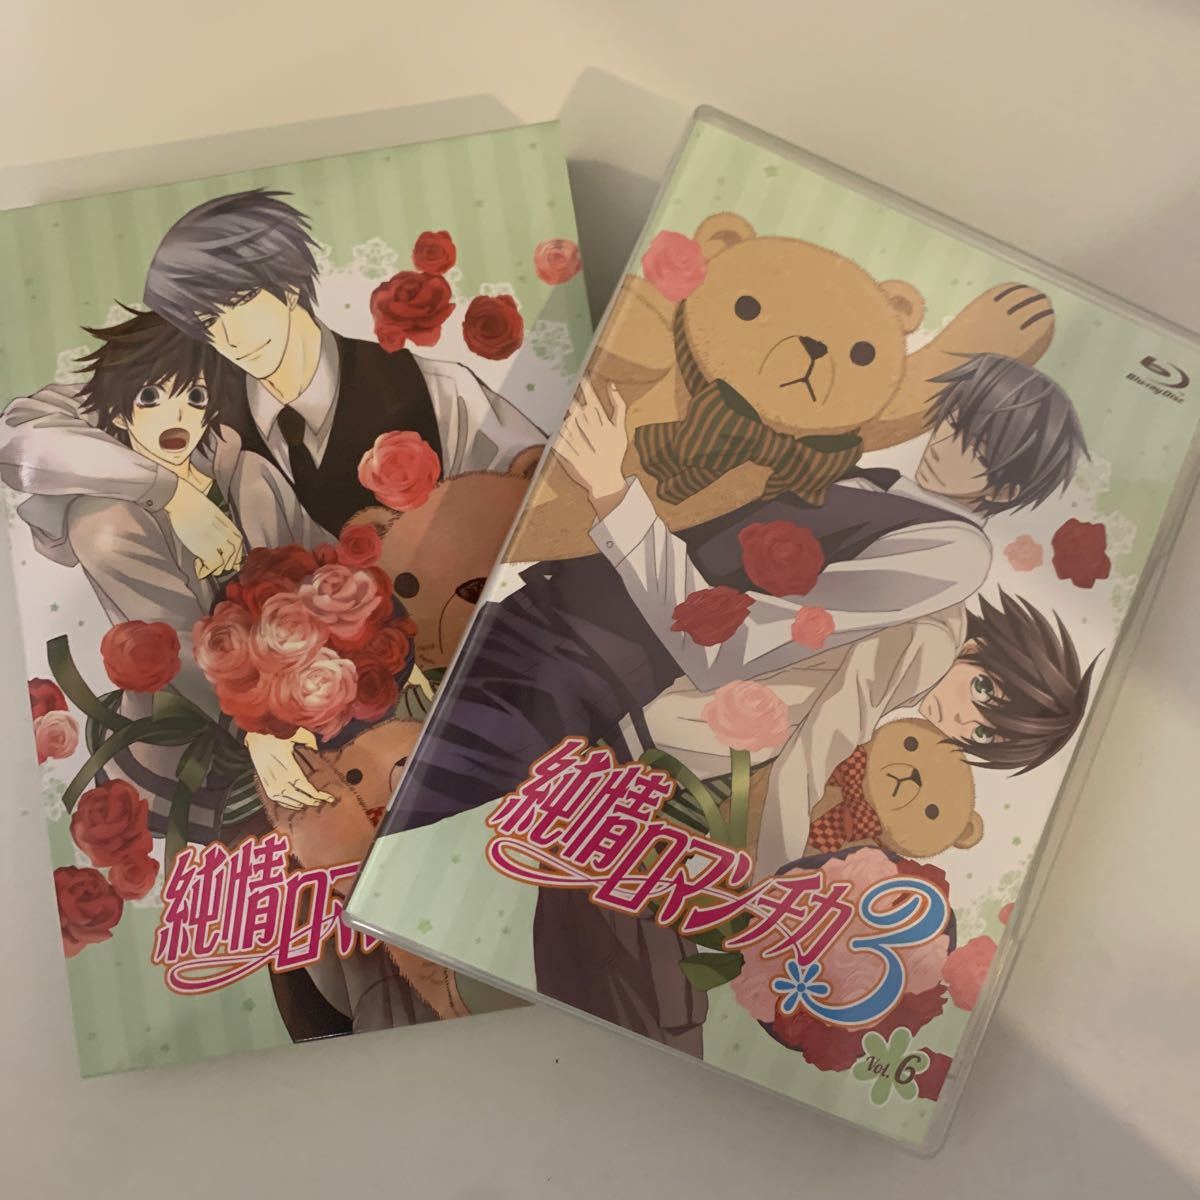 純情ロマンチカ3 第6巻 初回生産限定版 [Blu-ray]